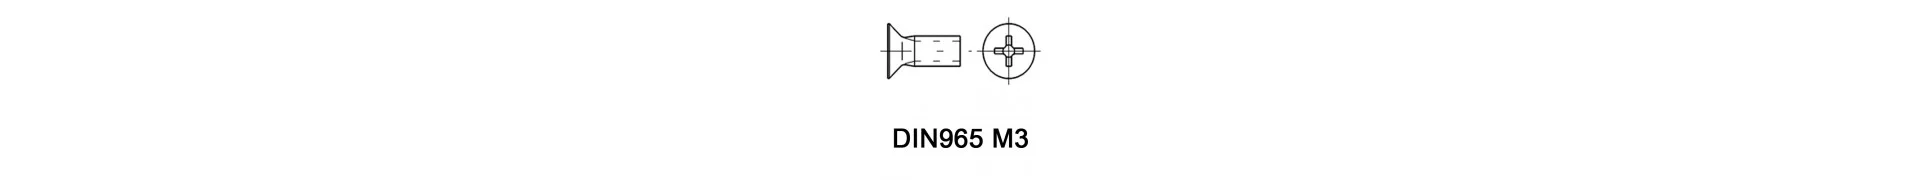 DIN965 M3